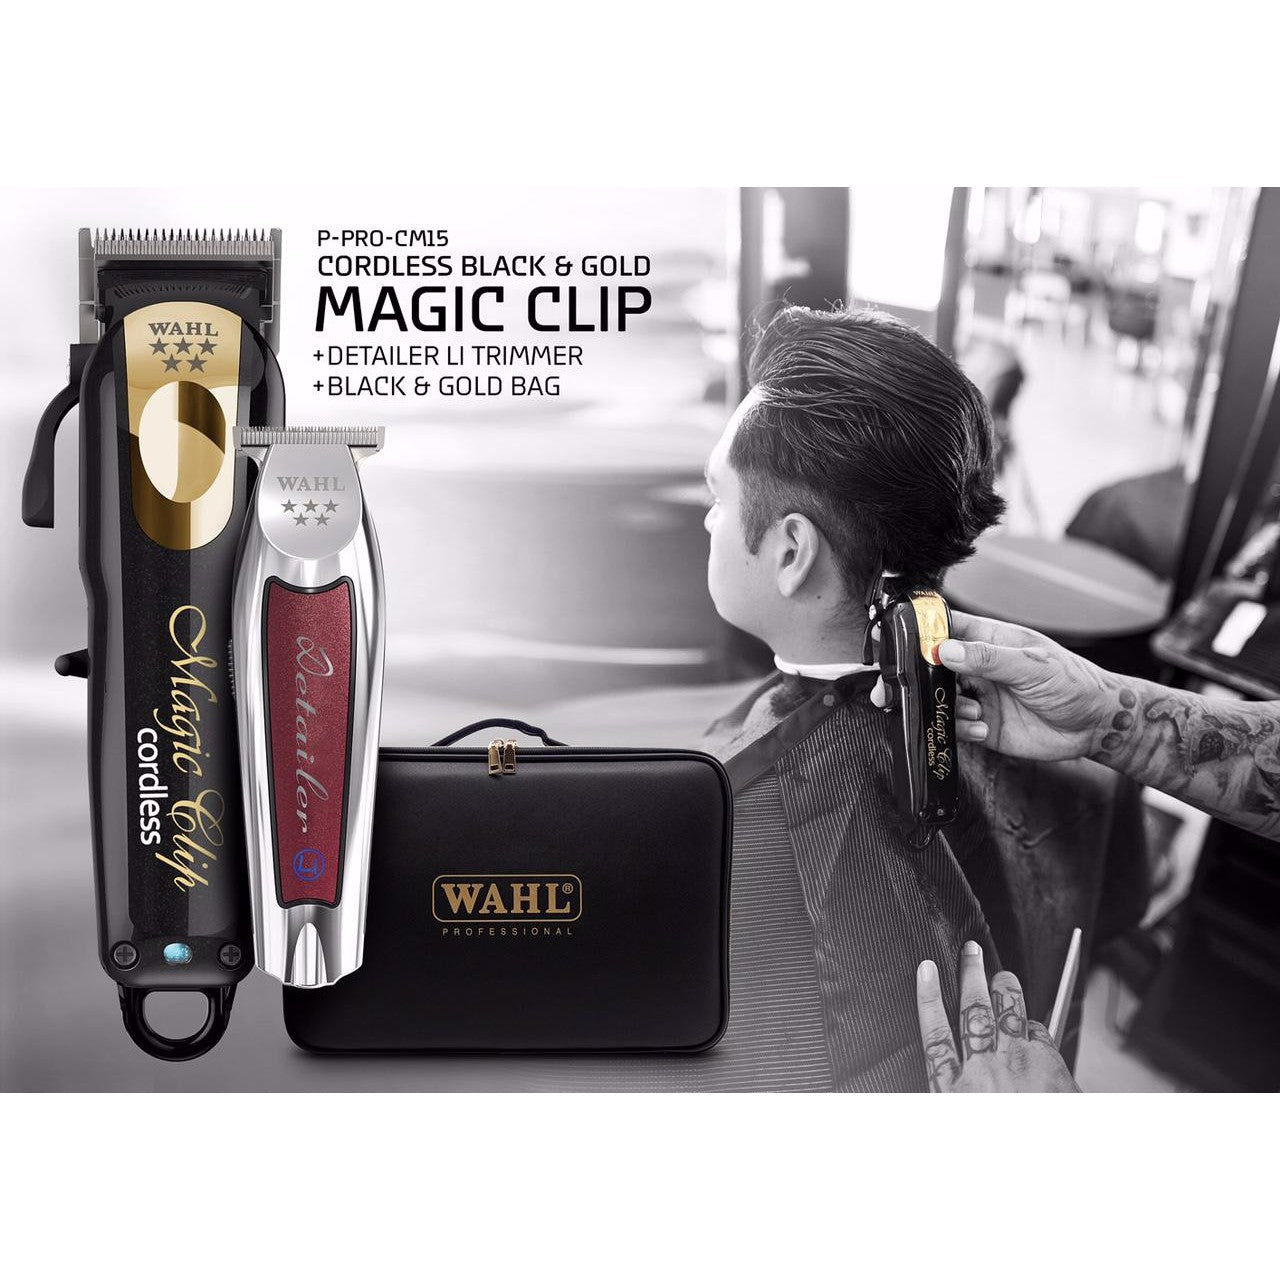 Wahl Magic Clip Black & Gold and Detailer Li Combo